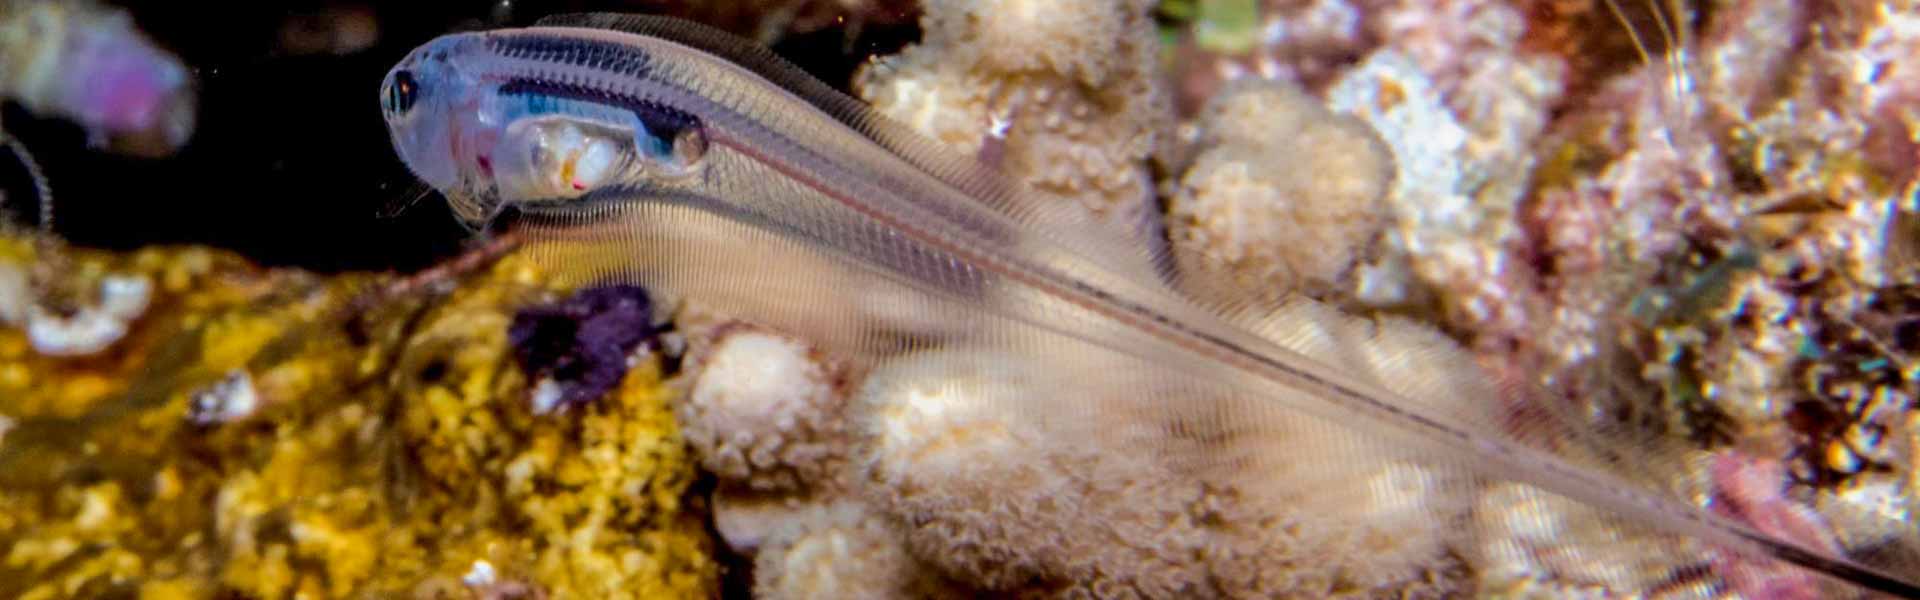 The Slender Pearlfish